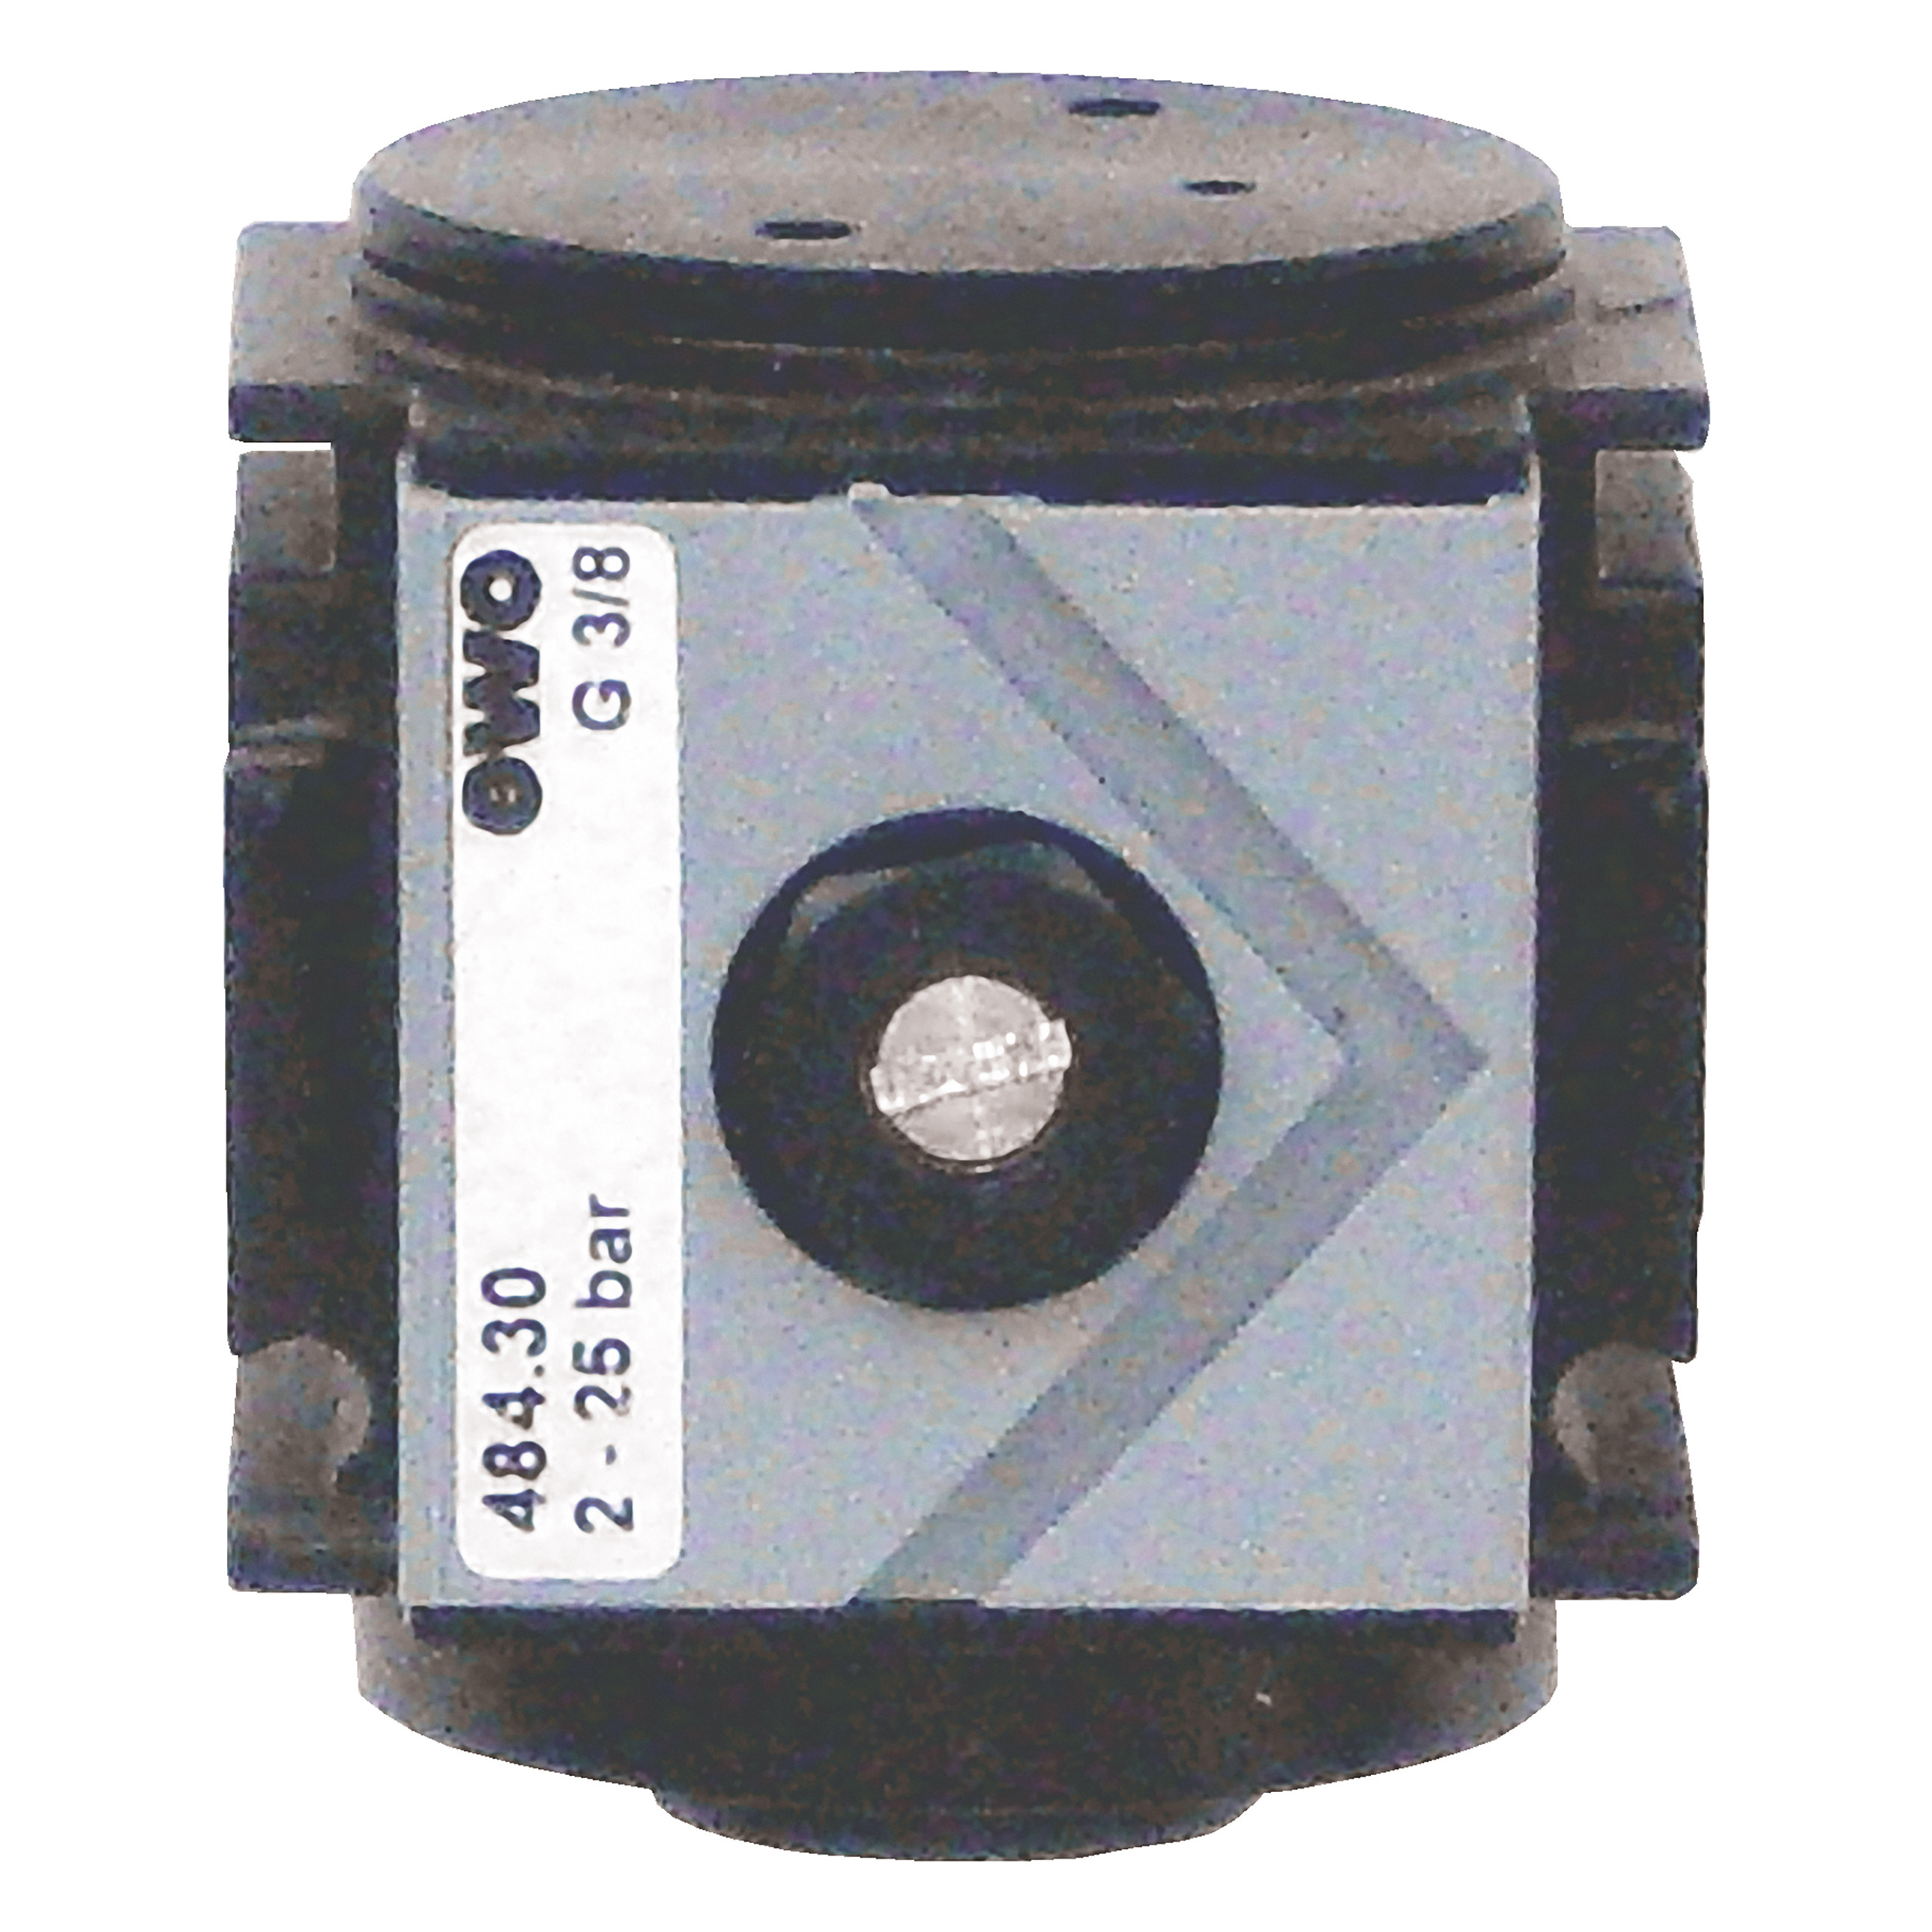 Pneumatoc starting valve type 484 variobloc, G½, BG 40, adjustable regulator, point of dispatch: ca. 0.6 × operating pressure